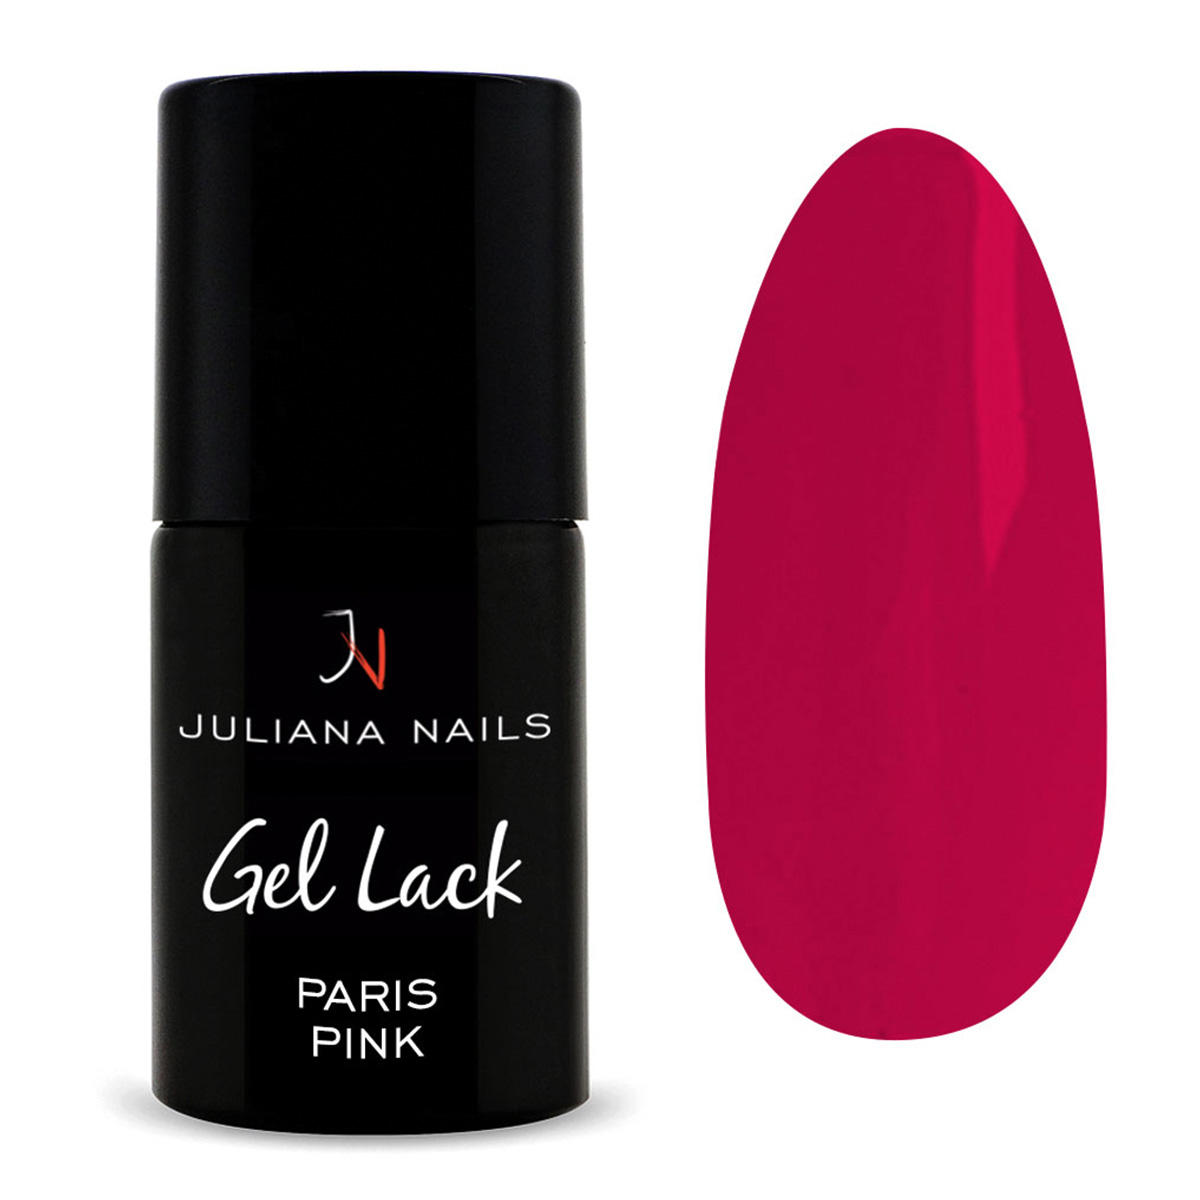 Juliana Nails Gel Lack Paris Pink, Flasche 6 ml - 1